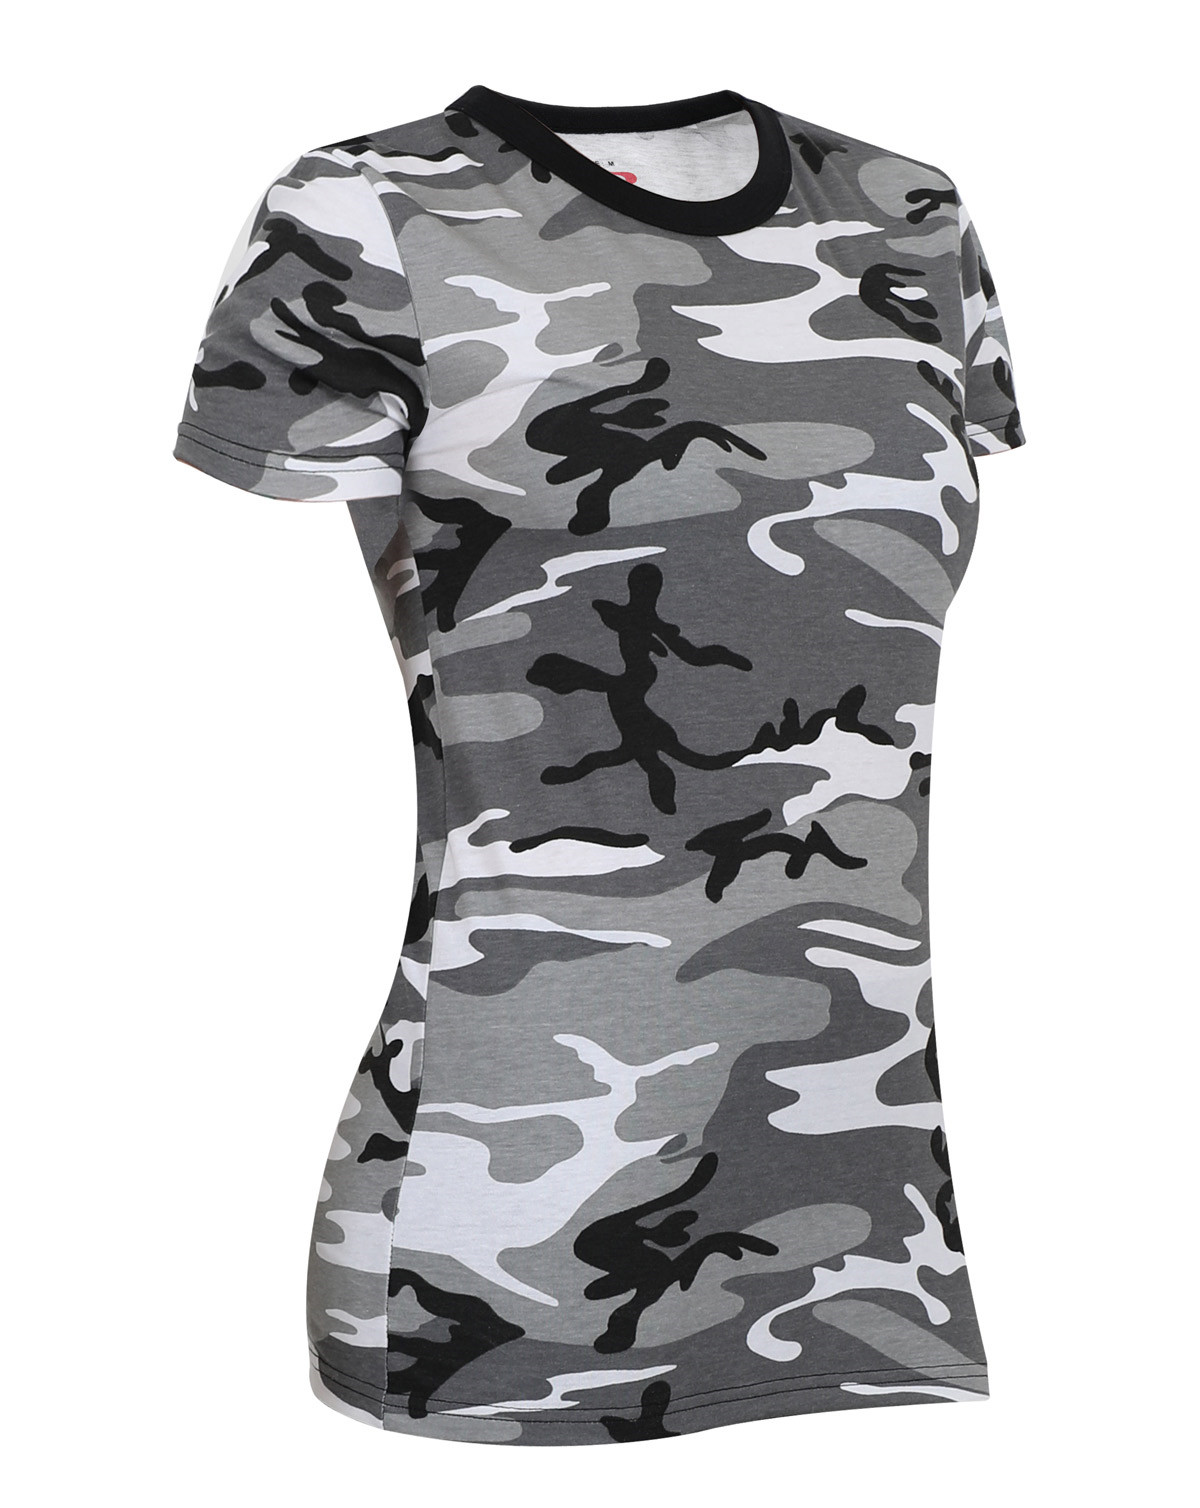 Rothco Camouflage T-Shirt (Urban Camo, L)